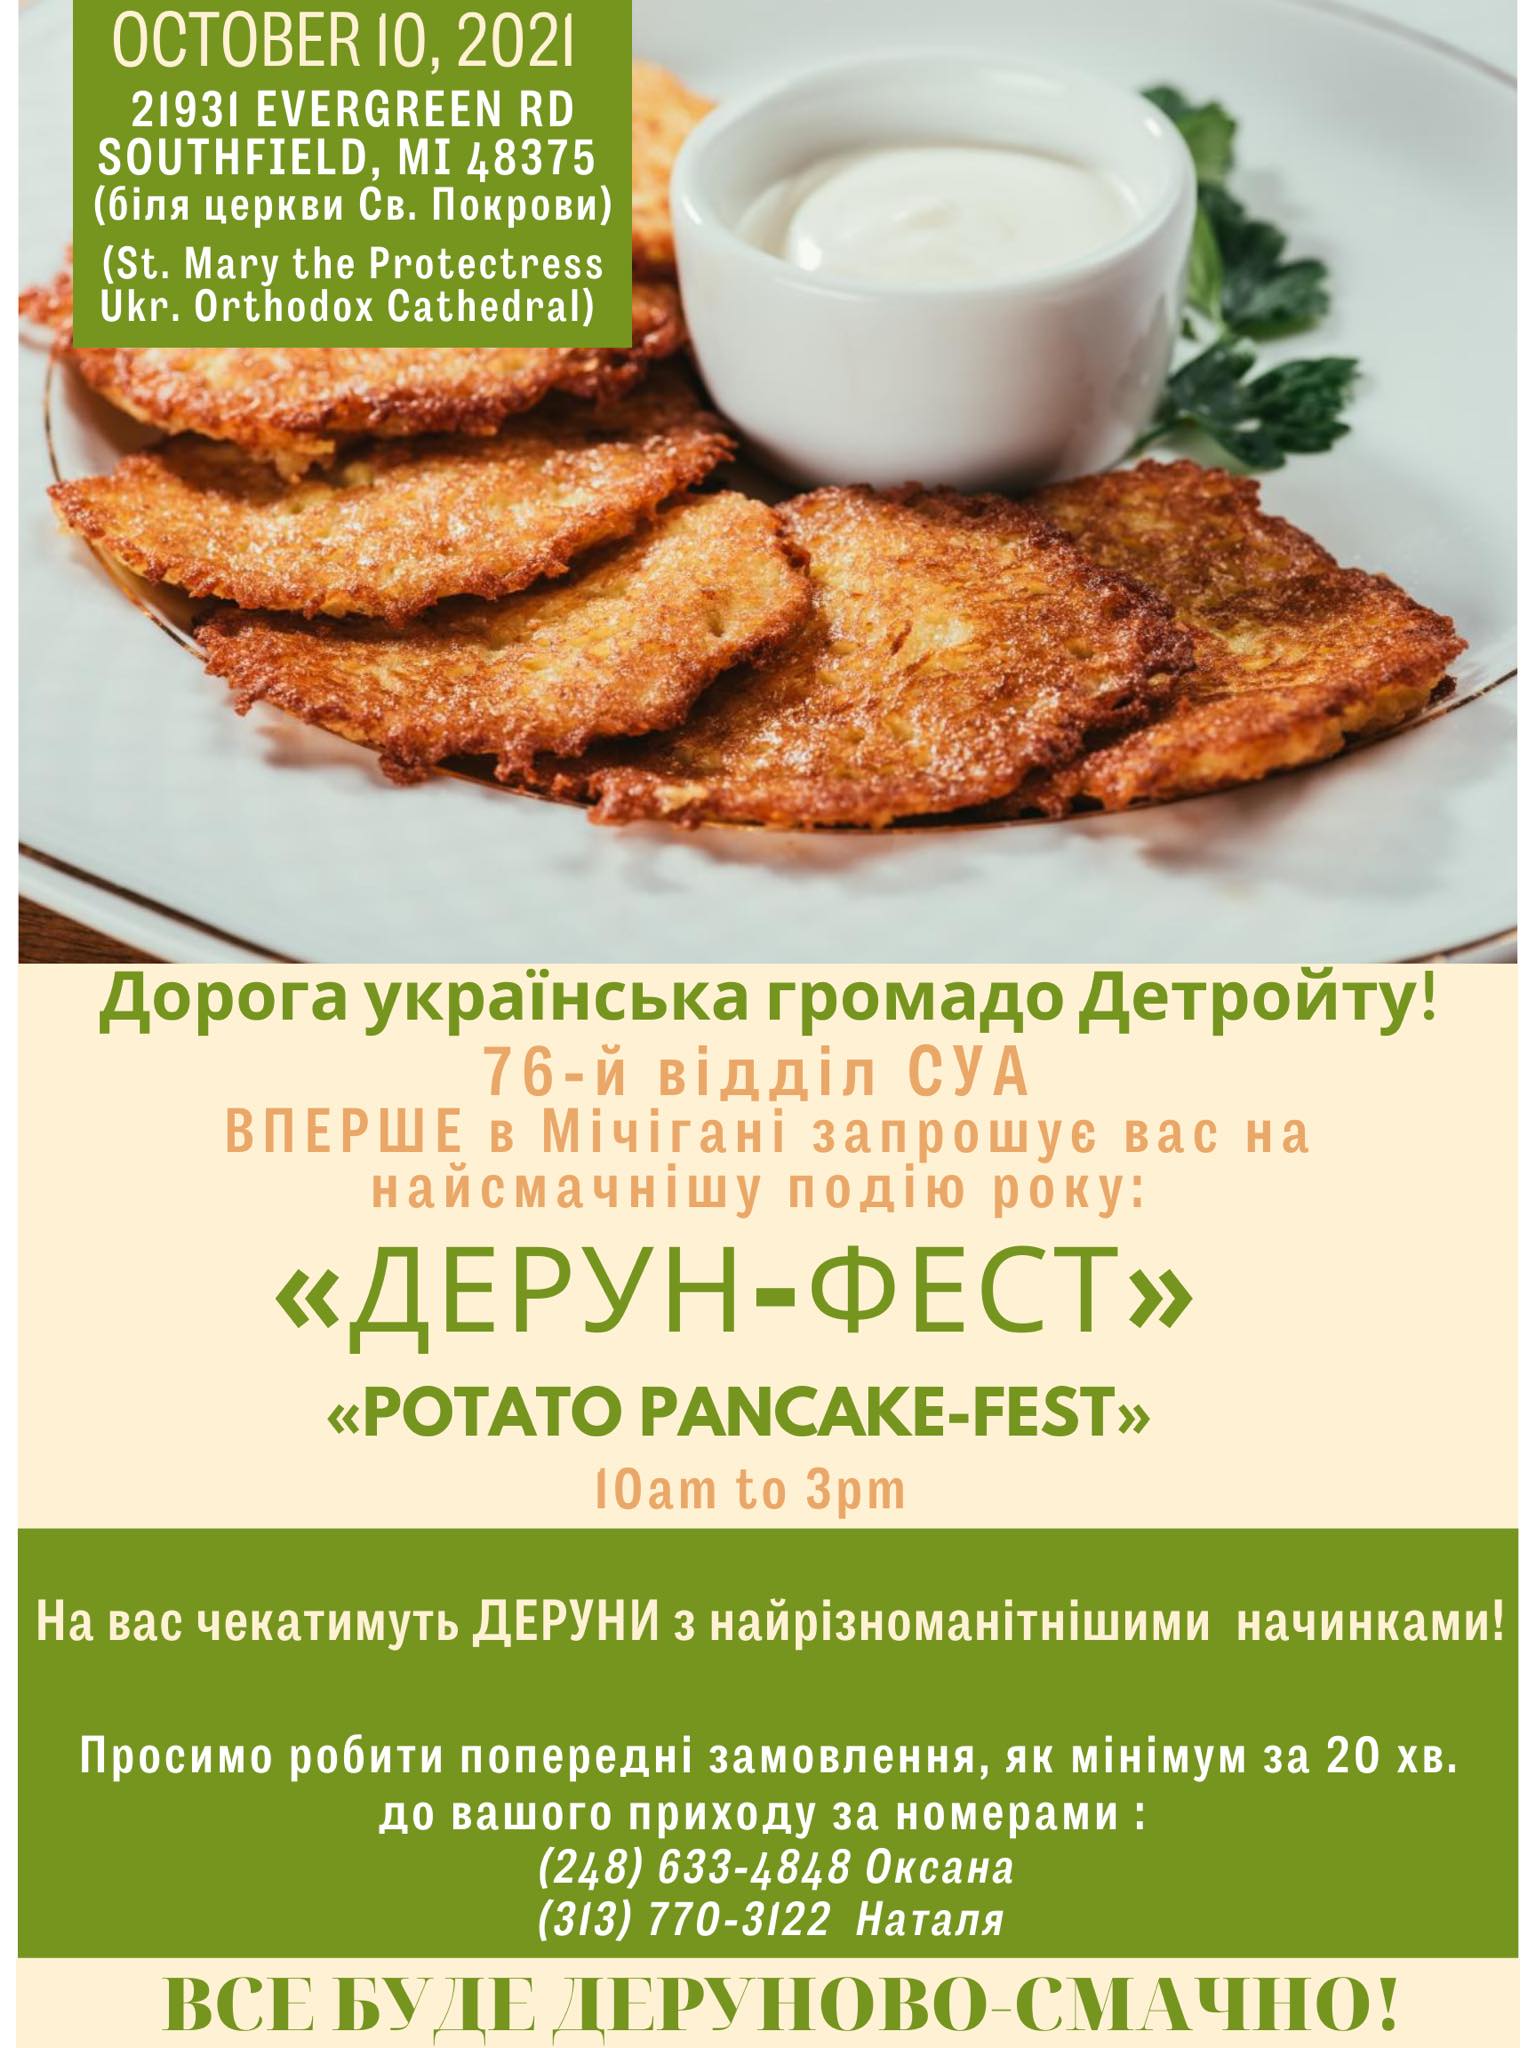 potato panckake festival posted by ukrainian selfreliance mi fcu